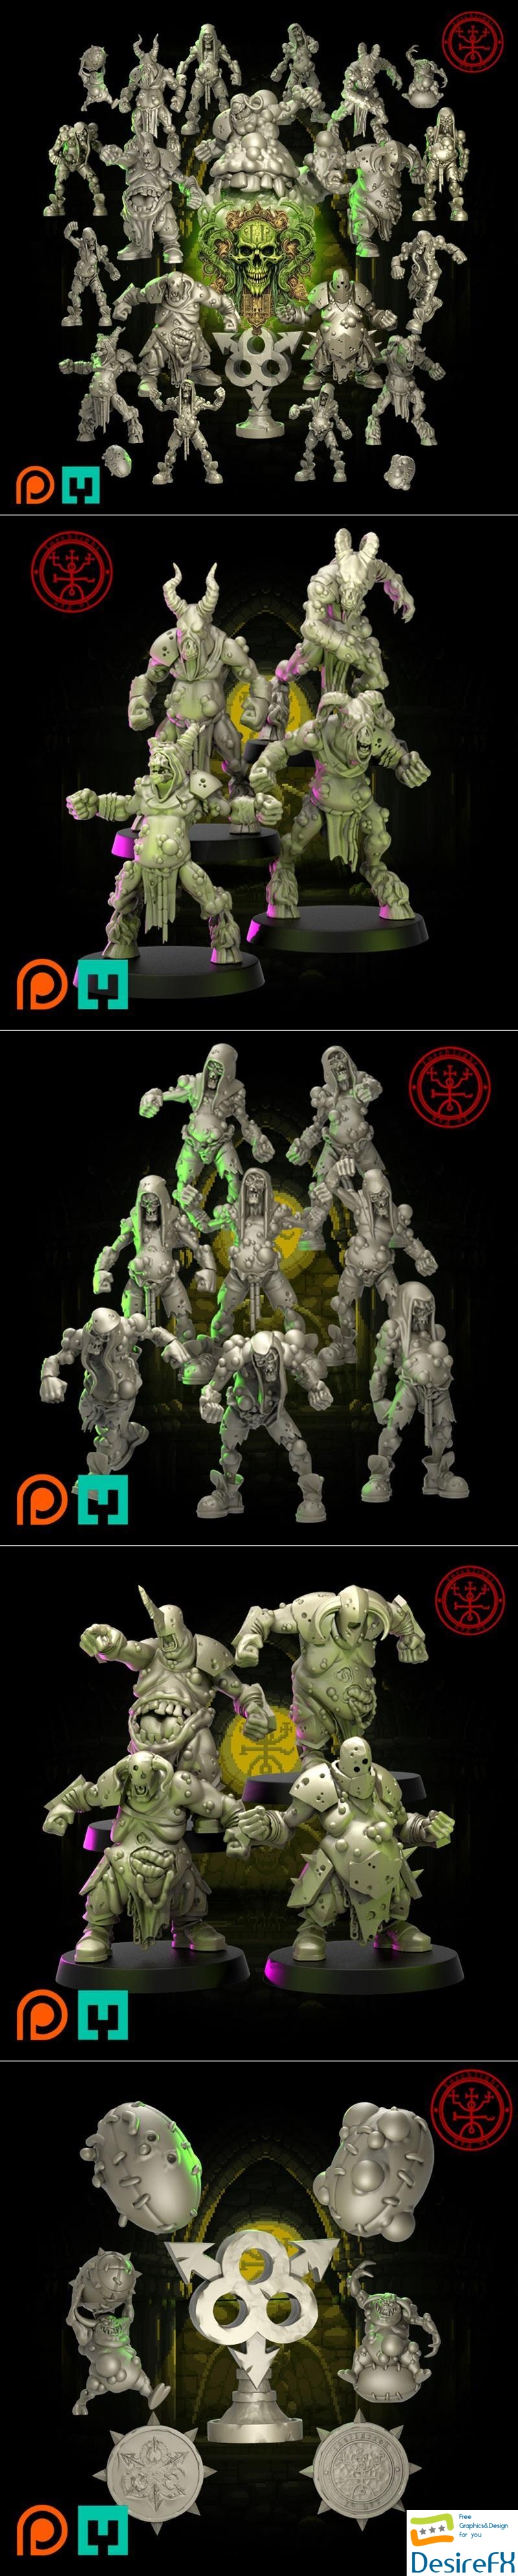 Torchlight Models - Juggernaut of Filth 3D Print